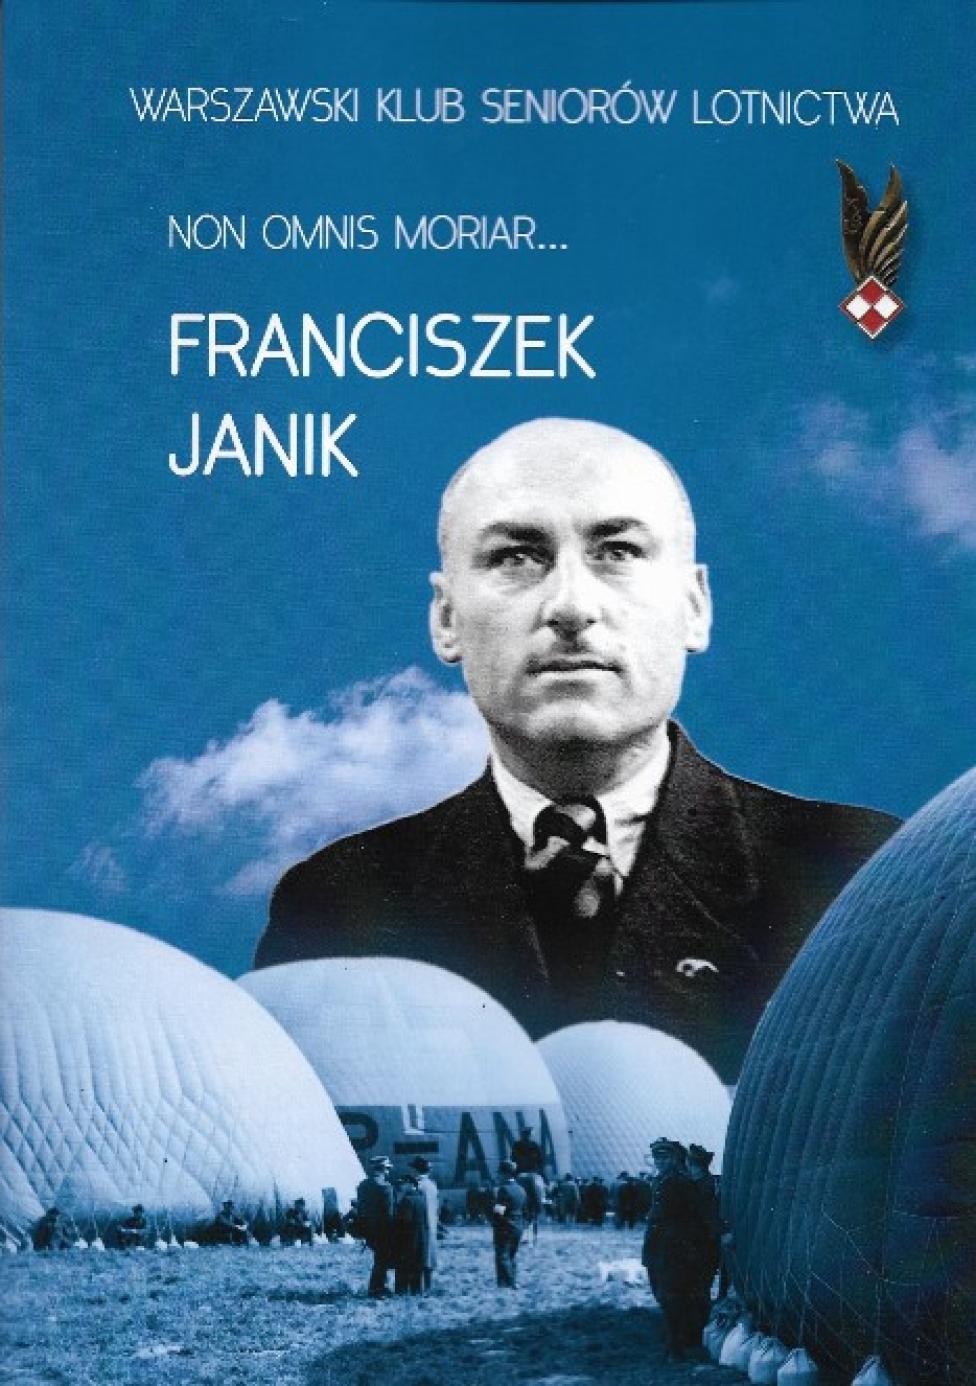 Książka "Non omnis moriar... Franciszek Janik" (fot. WKSL)